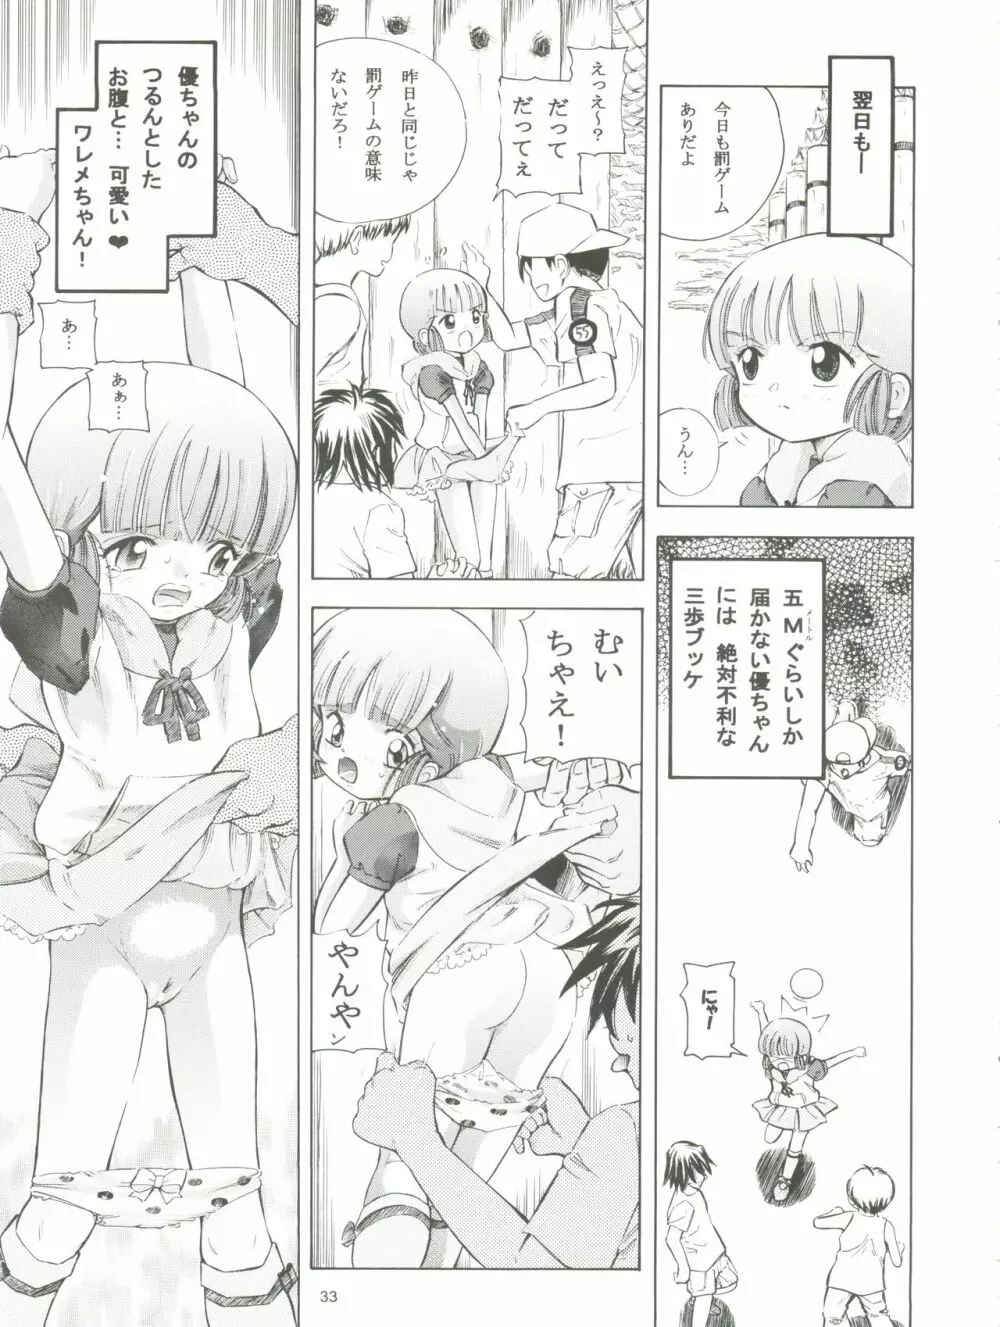 魔法旧式 17 魔女っ子丼! - page33